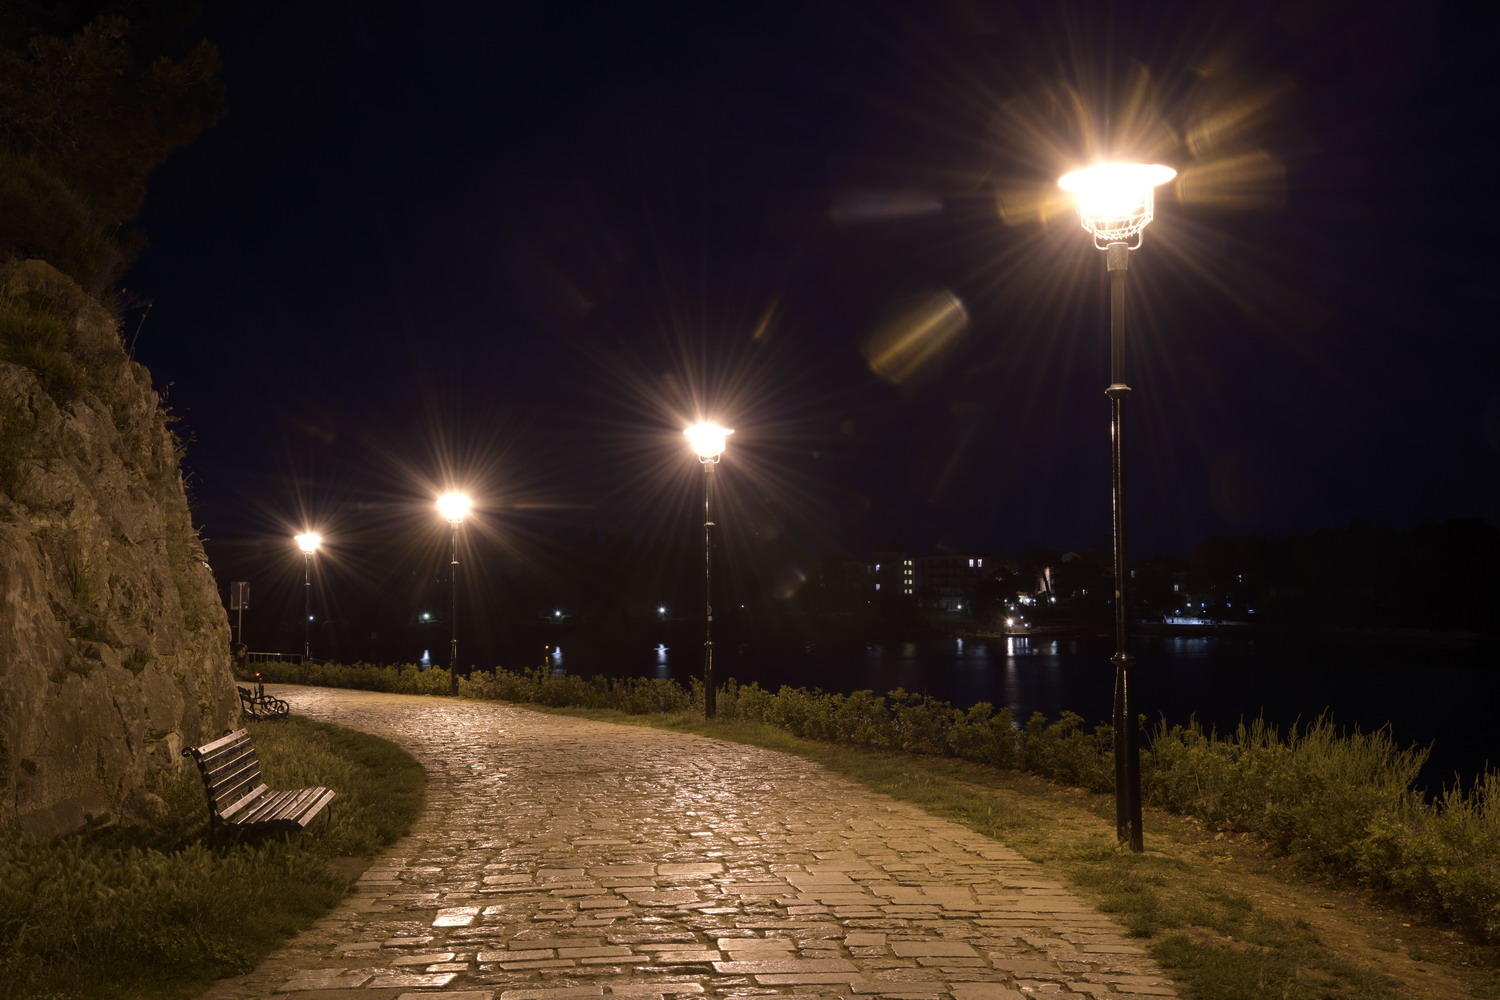 DSC_5127_1A1 - Nighttime Promenade (Rovinj)